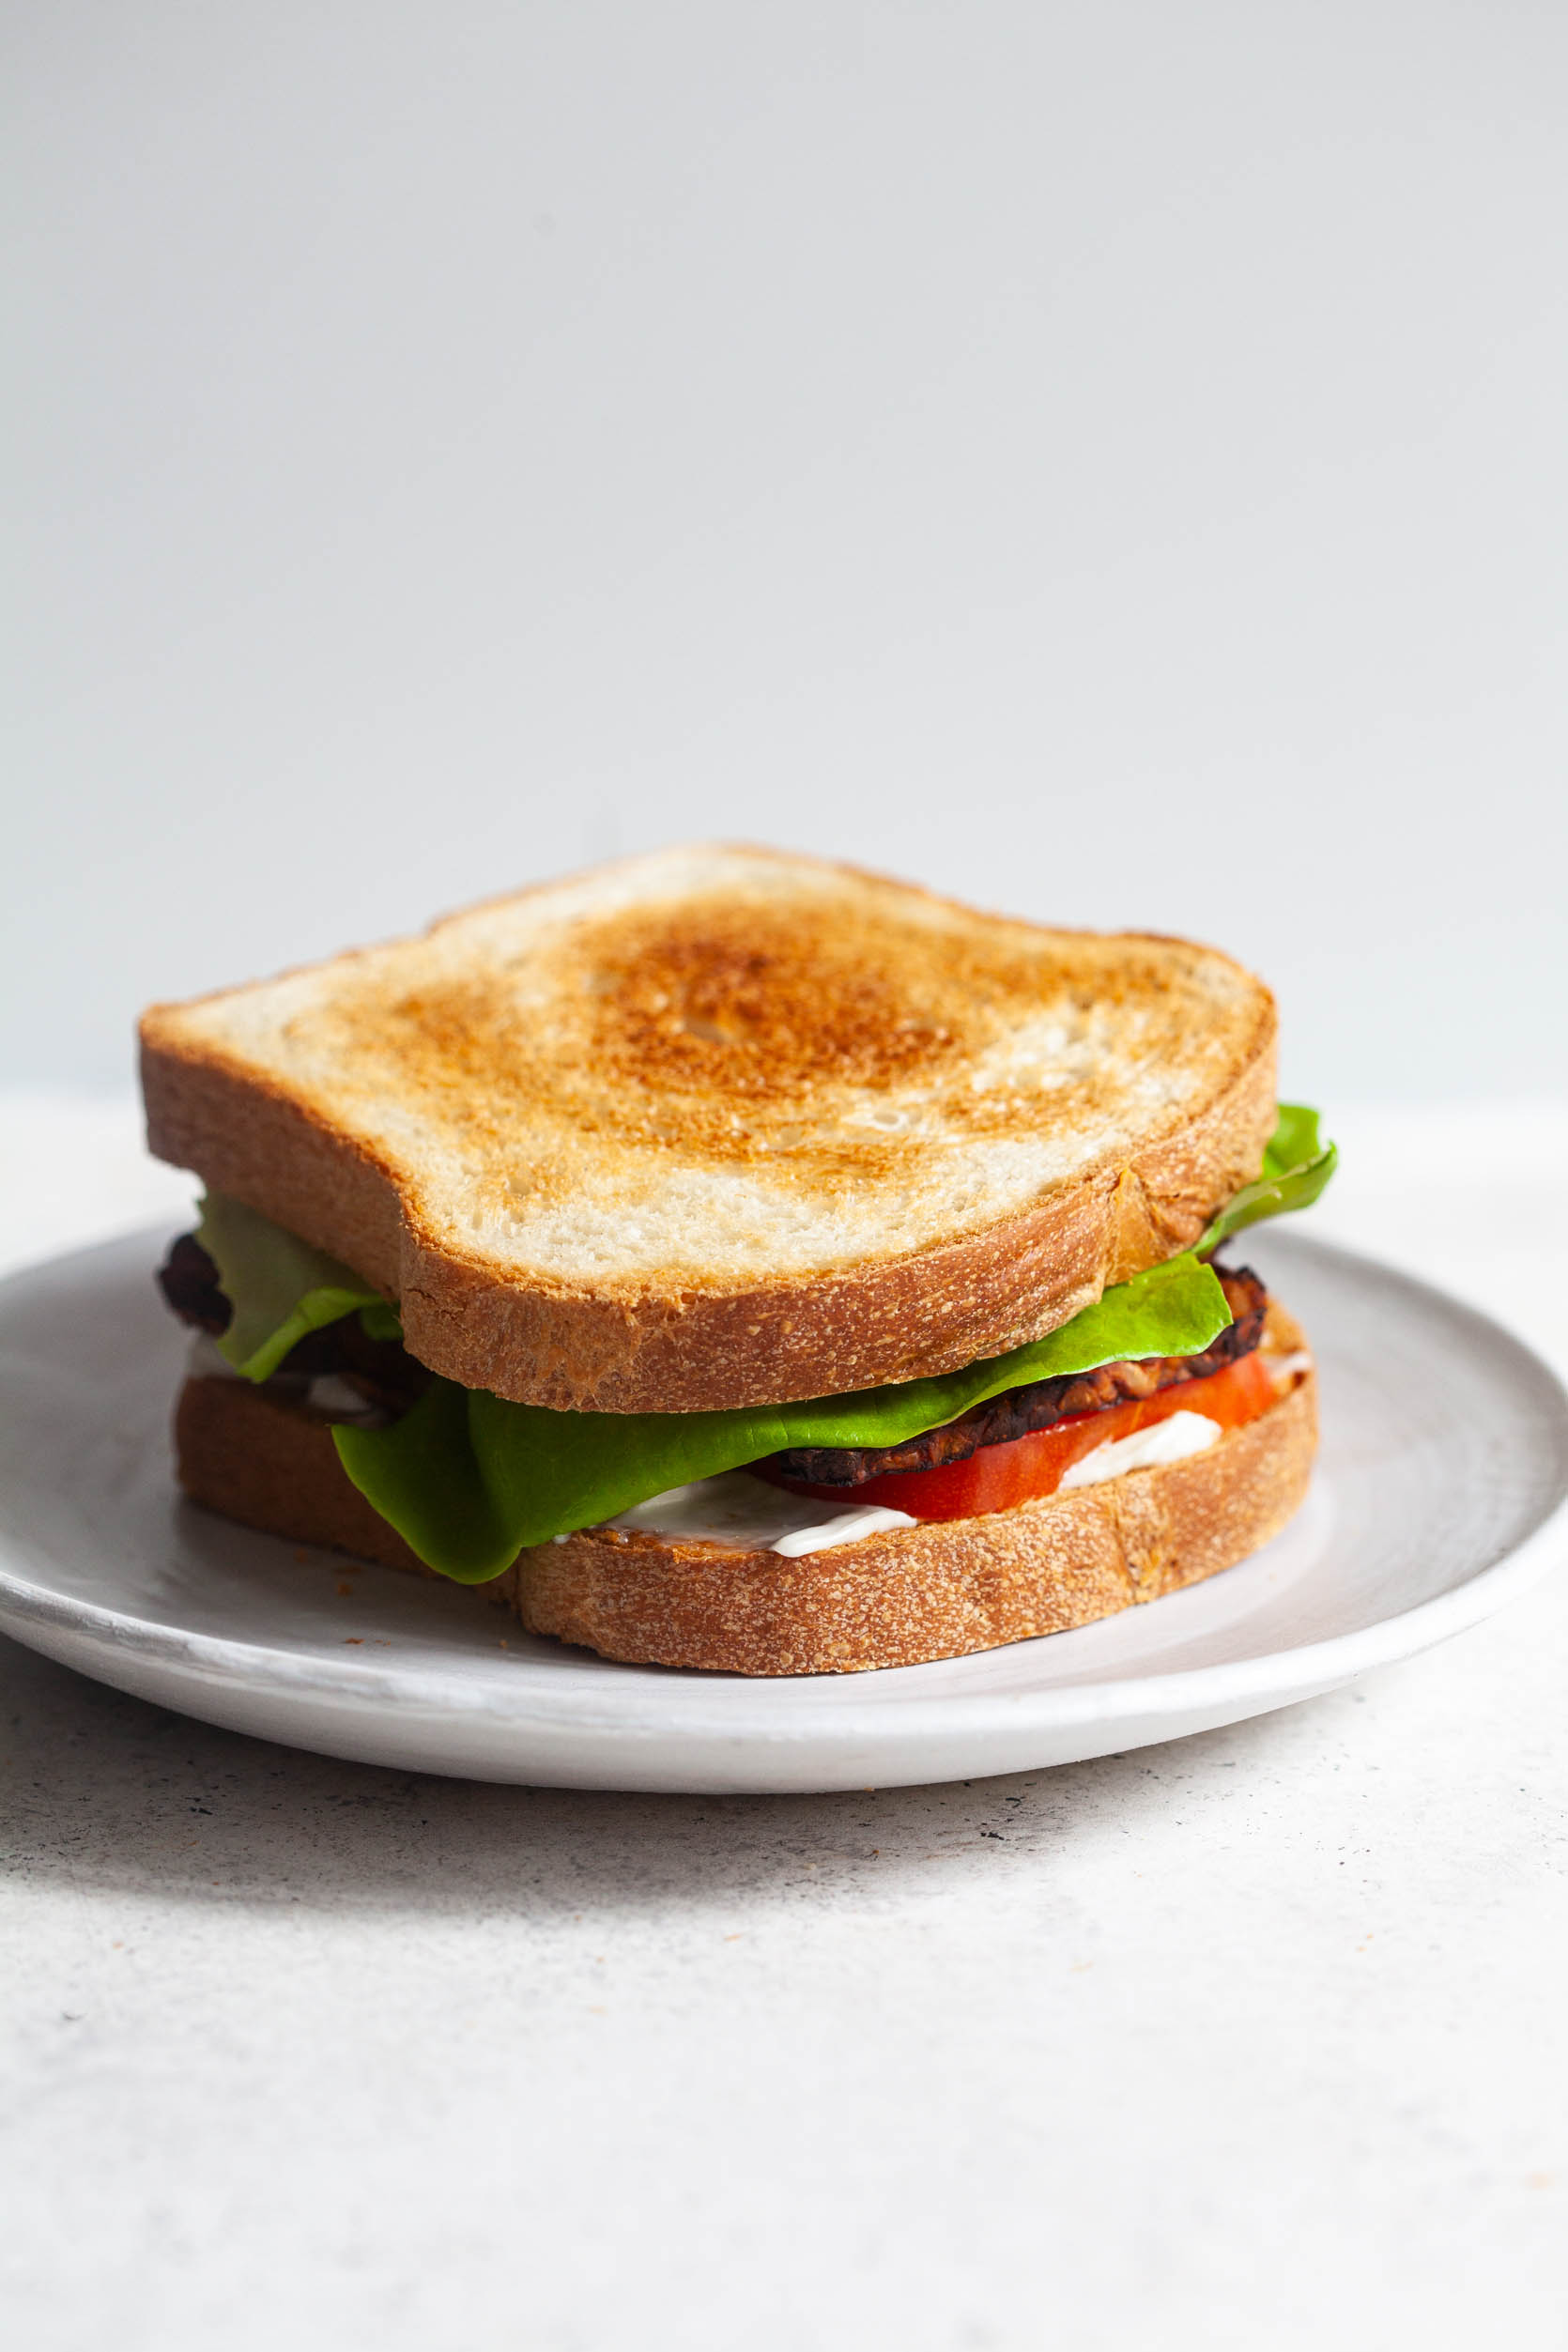 https://www.thefullhelping.com/wp-content/uploads/2020/04/Classic-vegan-white-sandwich-bread-1.jpg